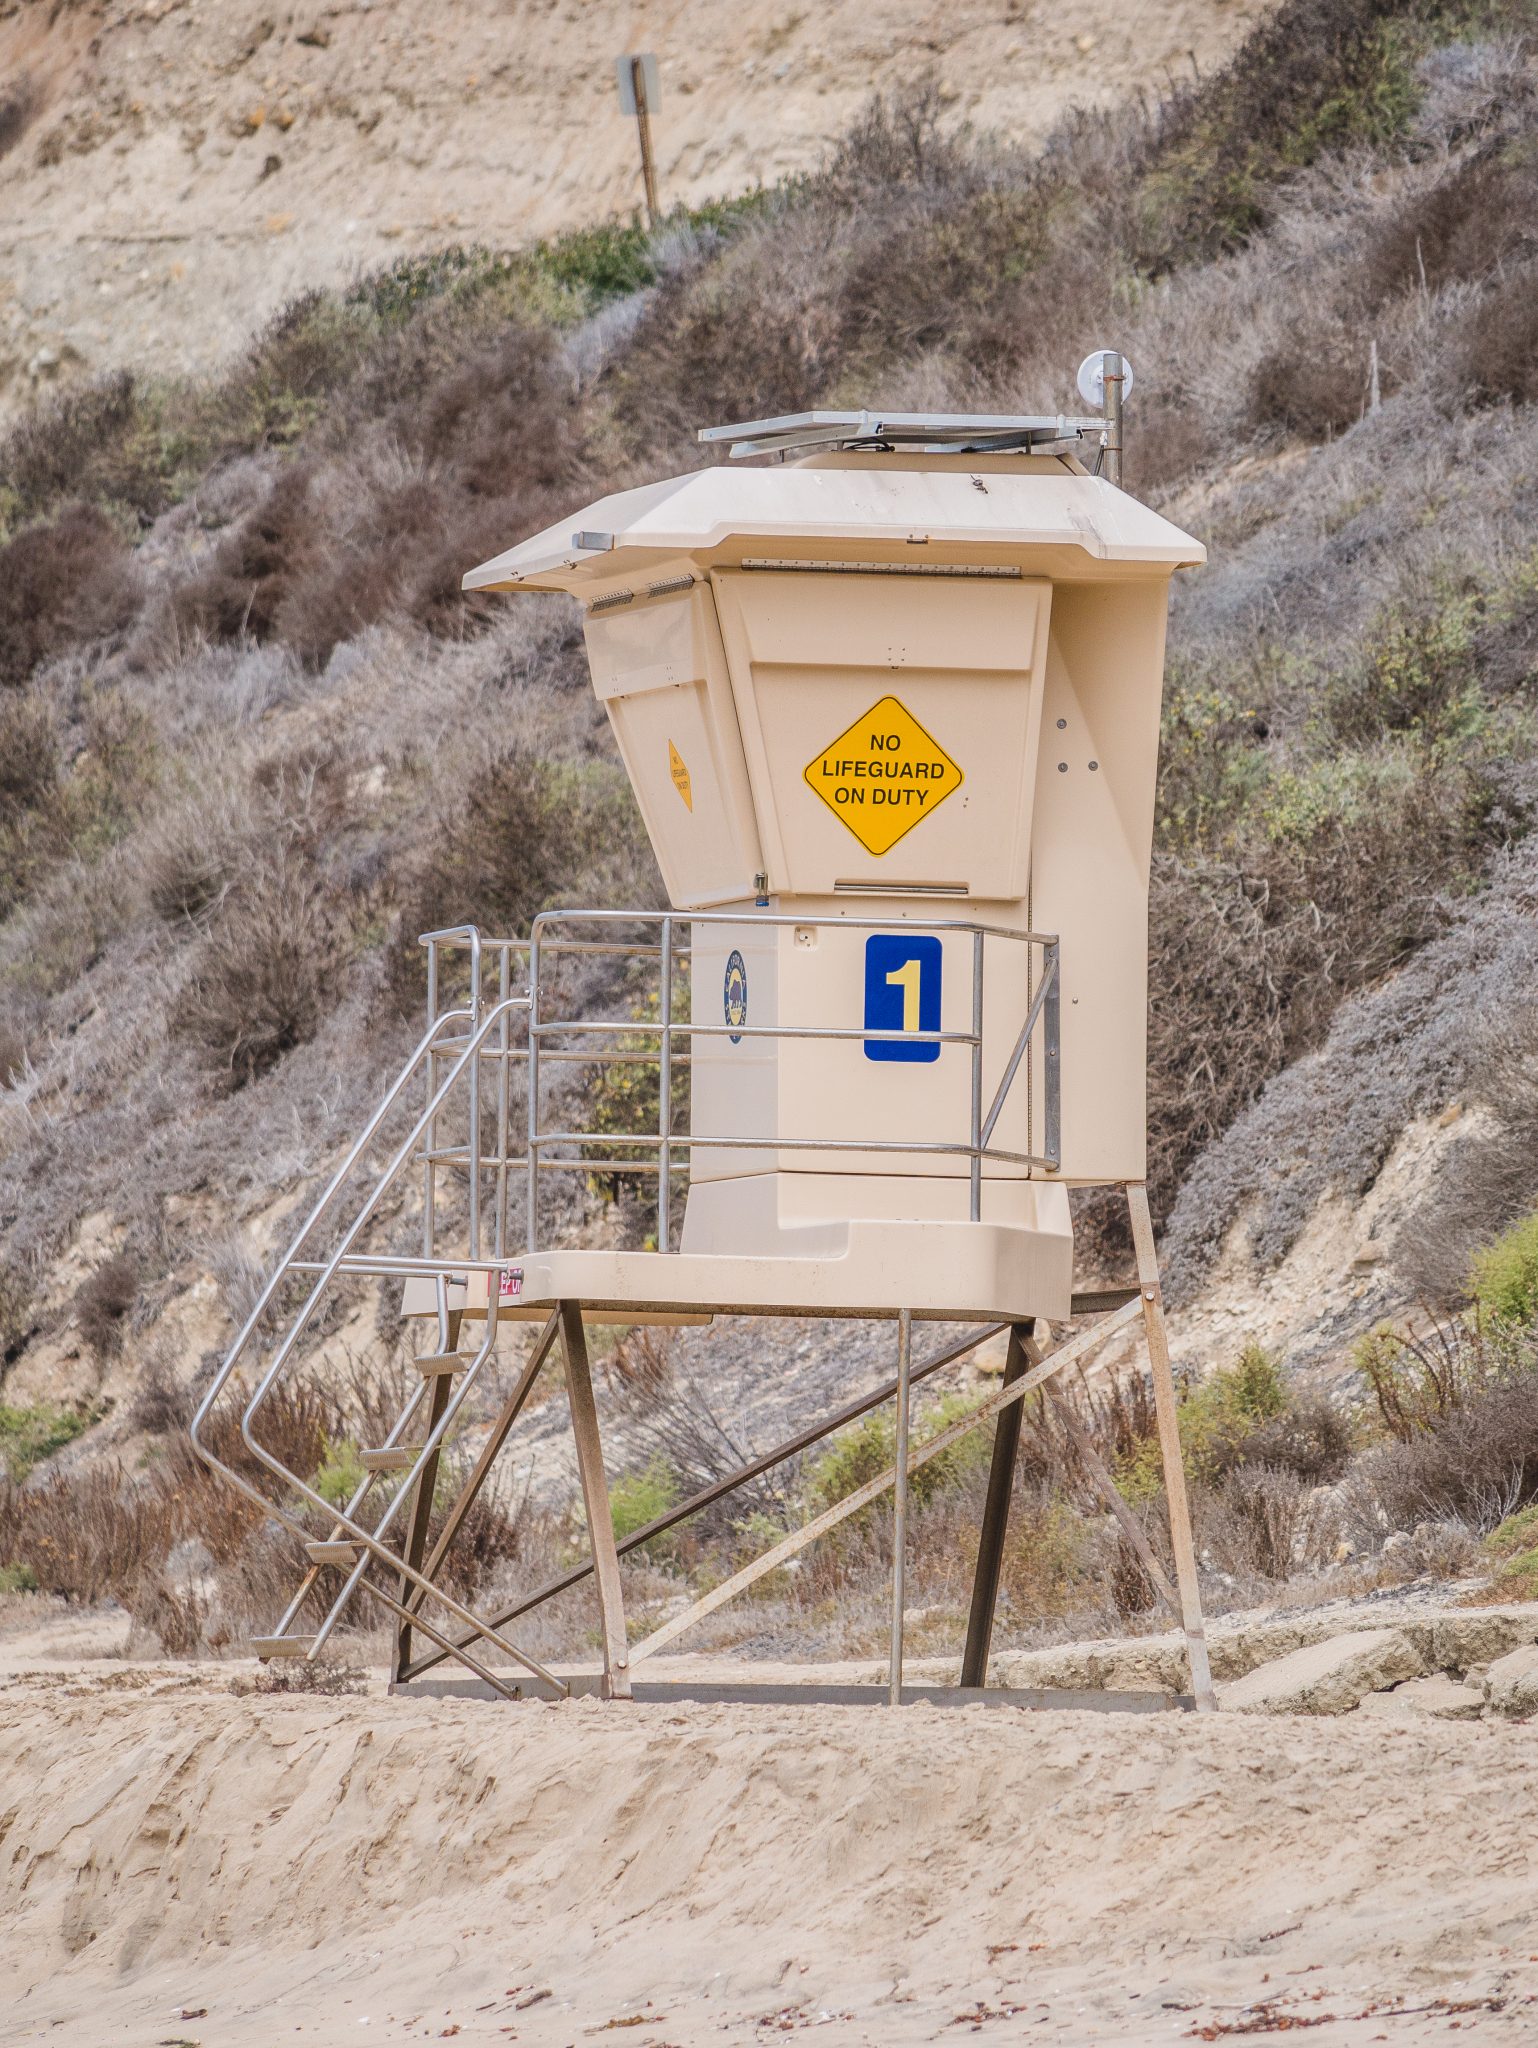 Lifeguard stand on a California beach